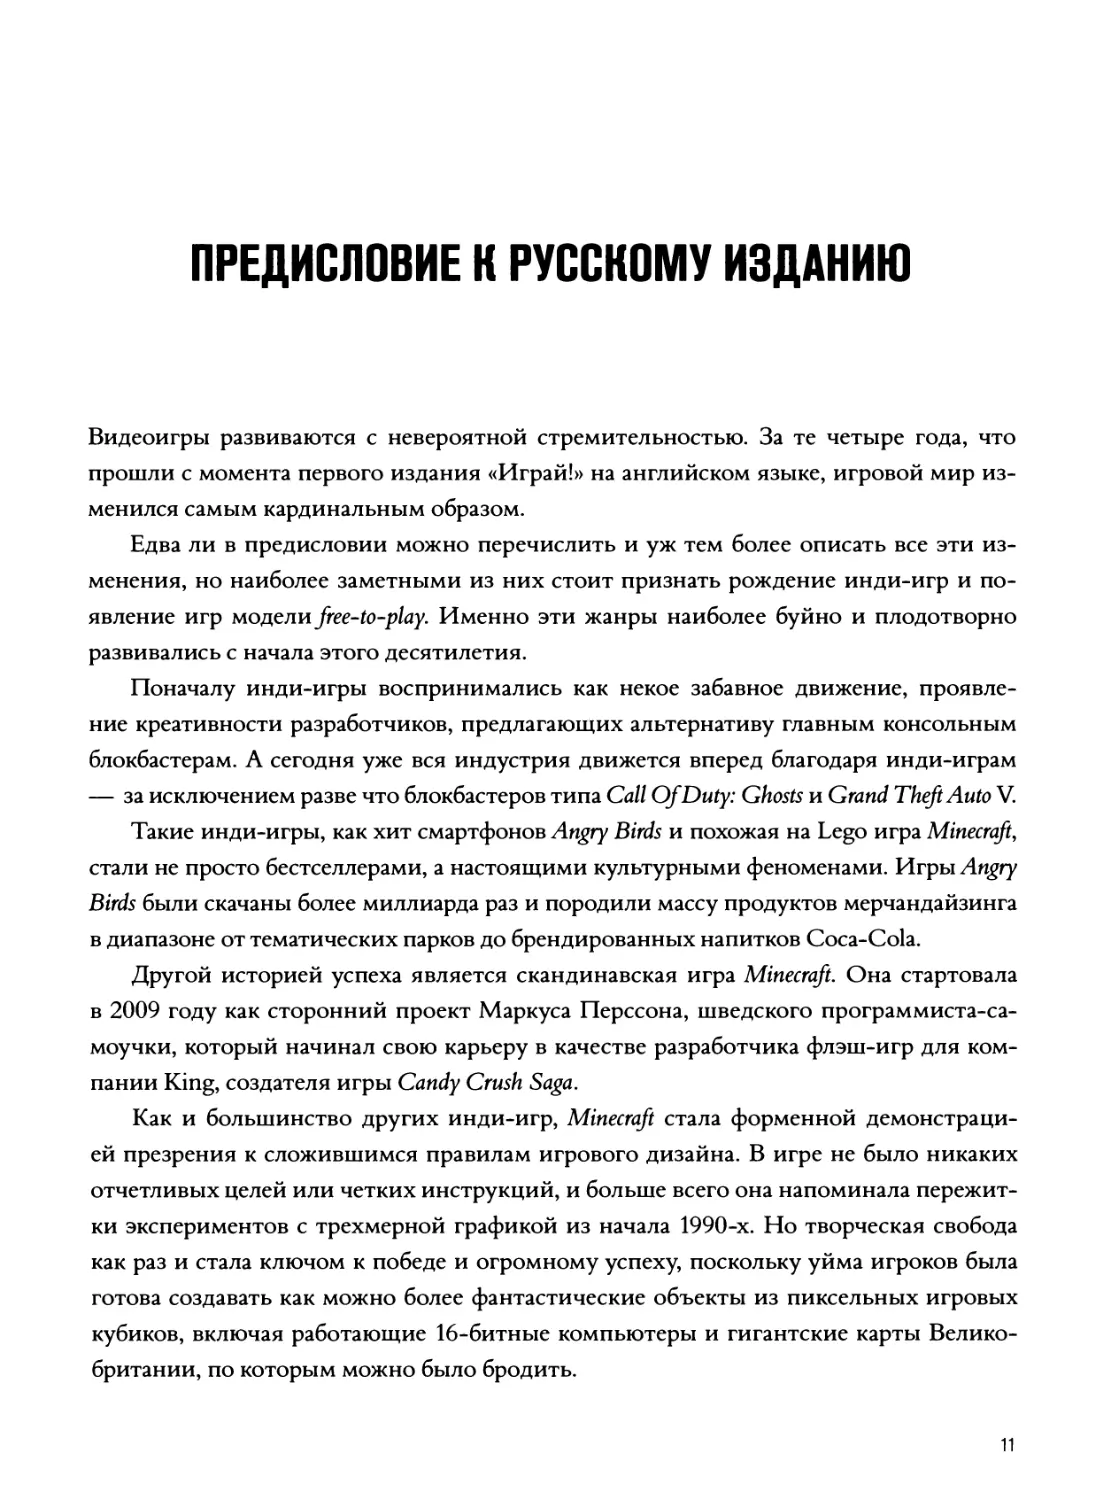 Предисловие к русскому изданию